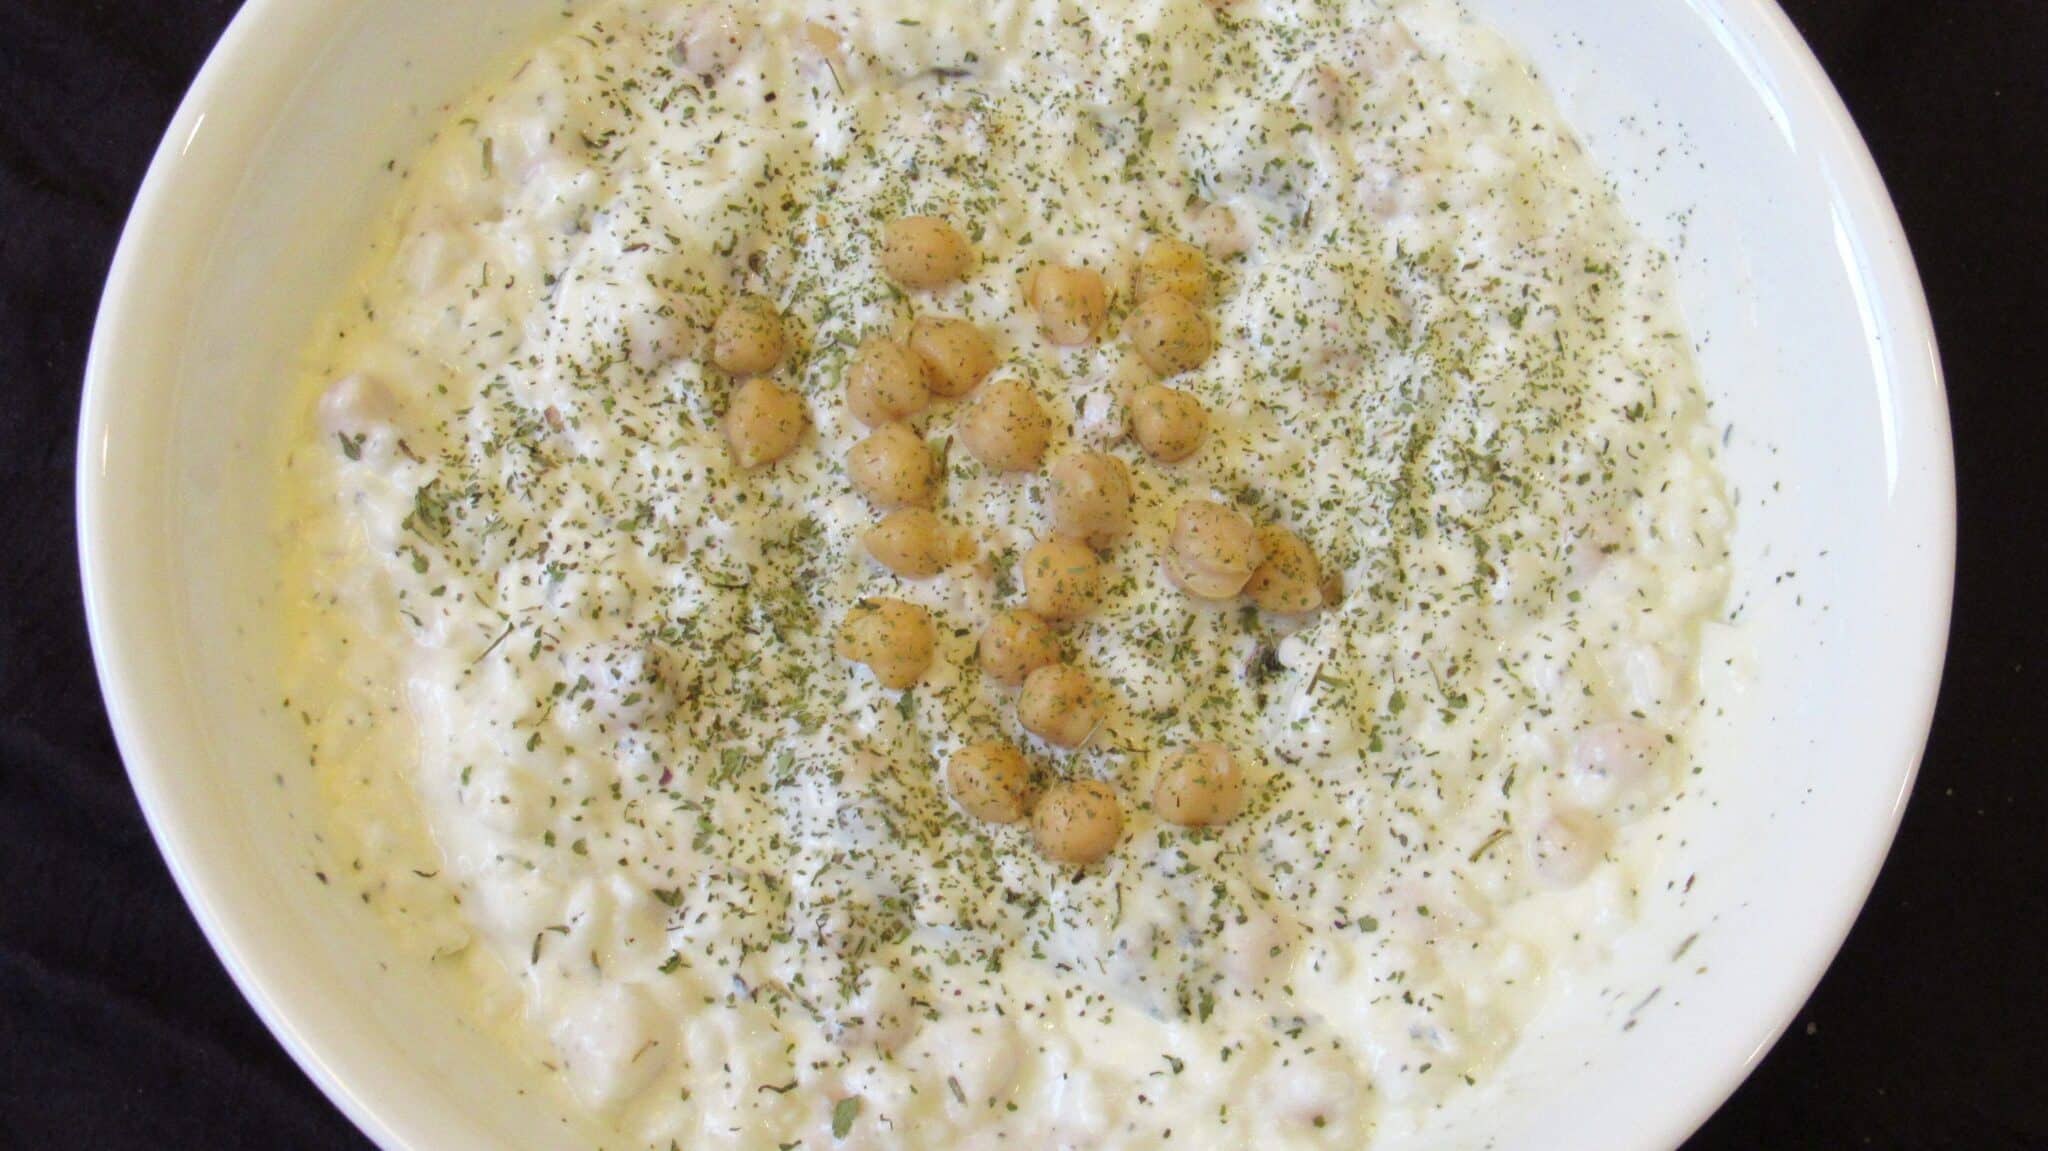 chickpea yogurt recipe served in a white bowl.